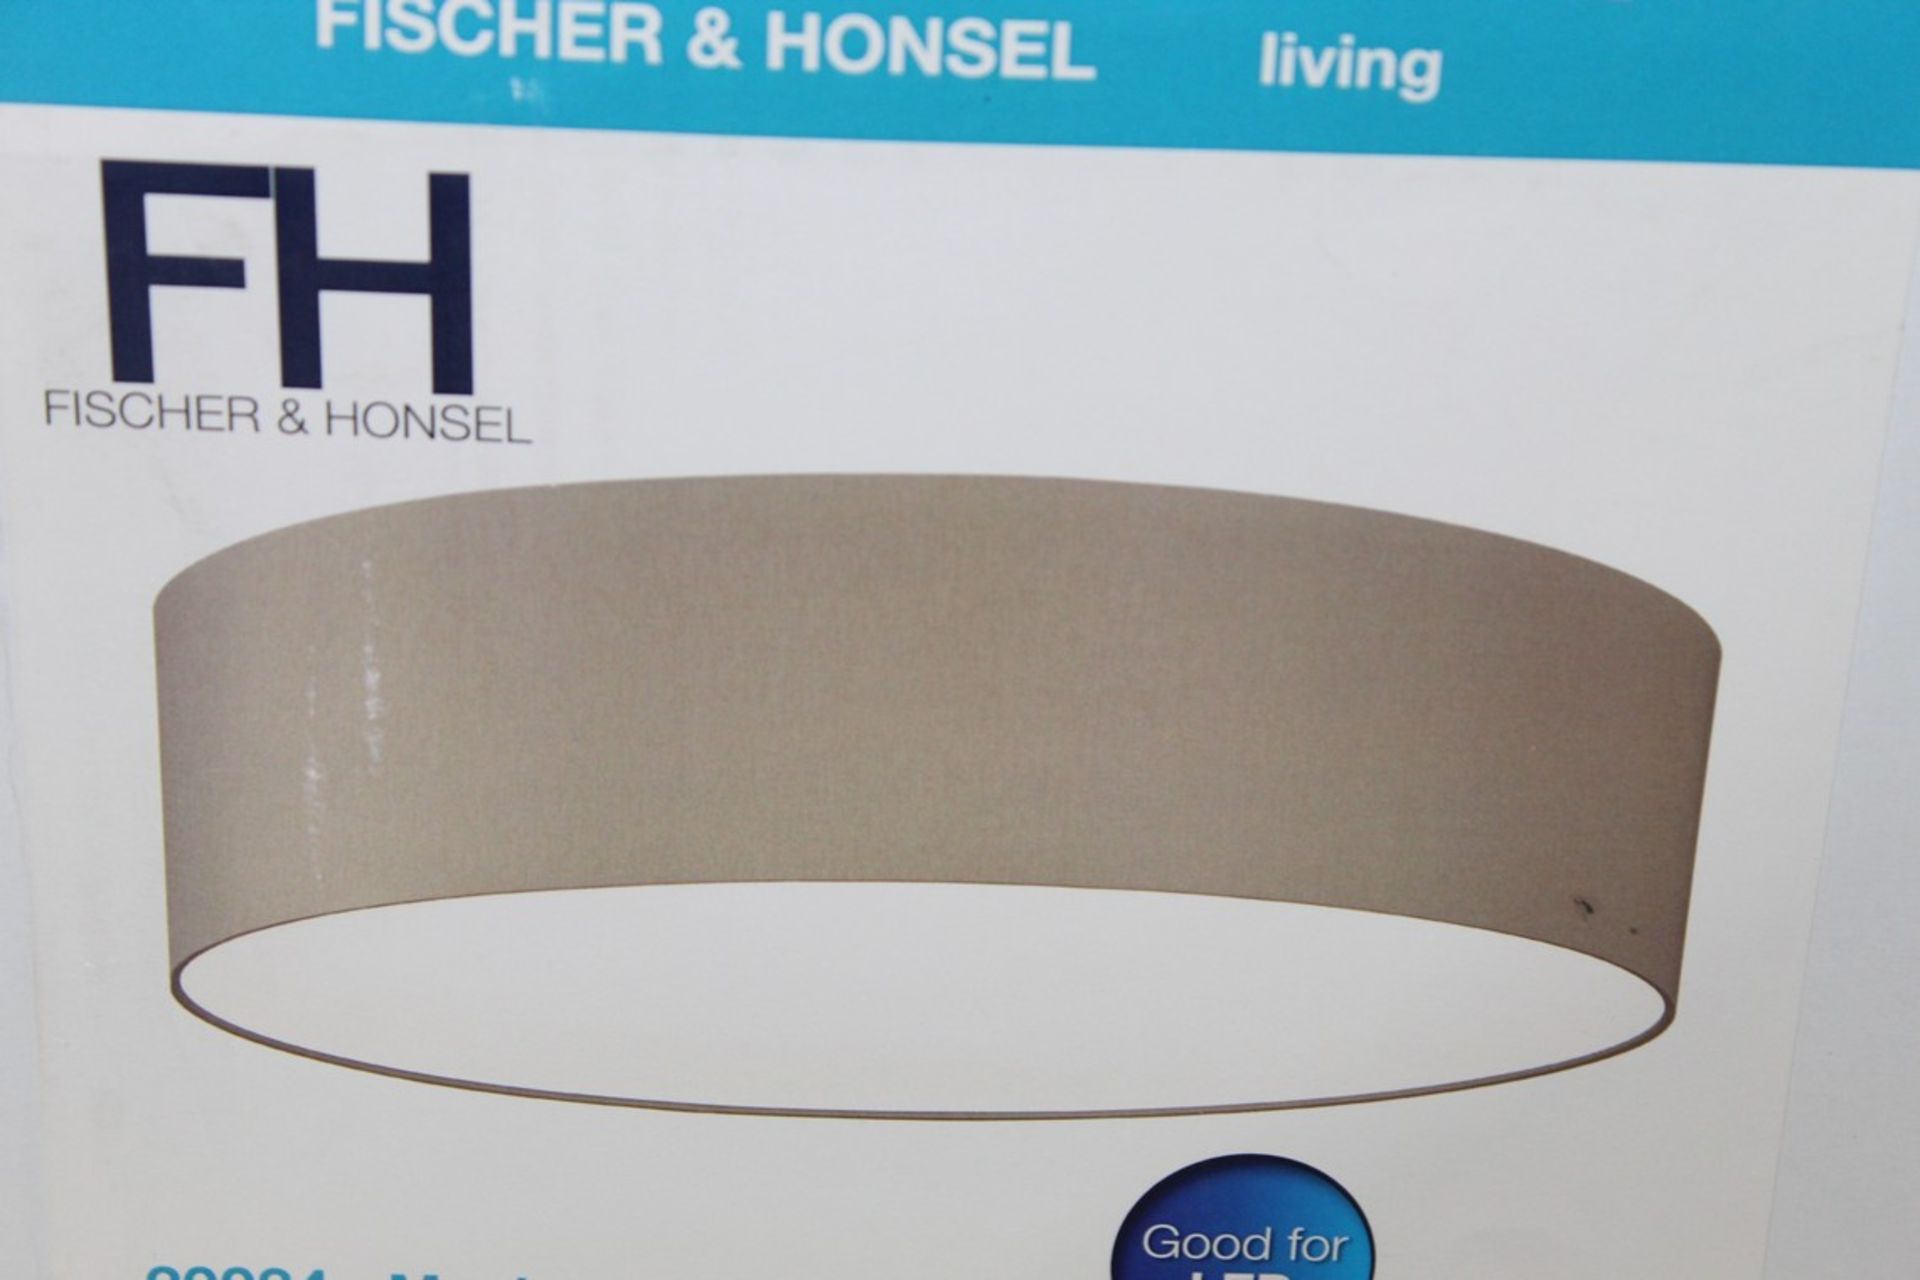 Boxed Fisher & Honsol Matt Large Designer Ceiling Light RRP £85 (Pictures Are For Illustration